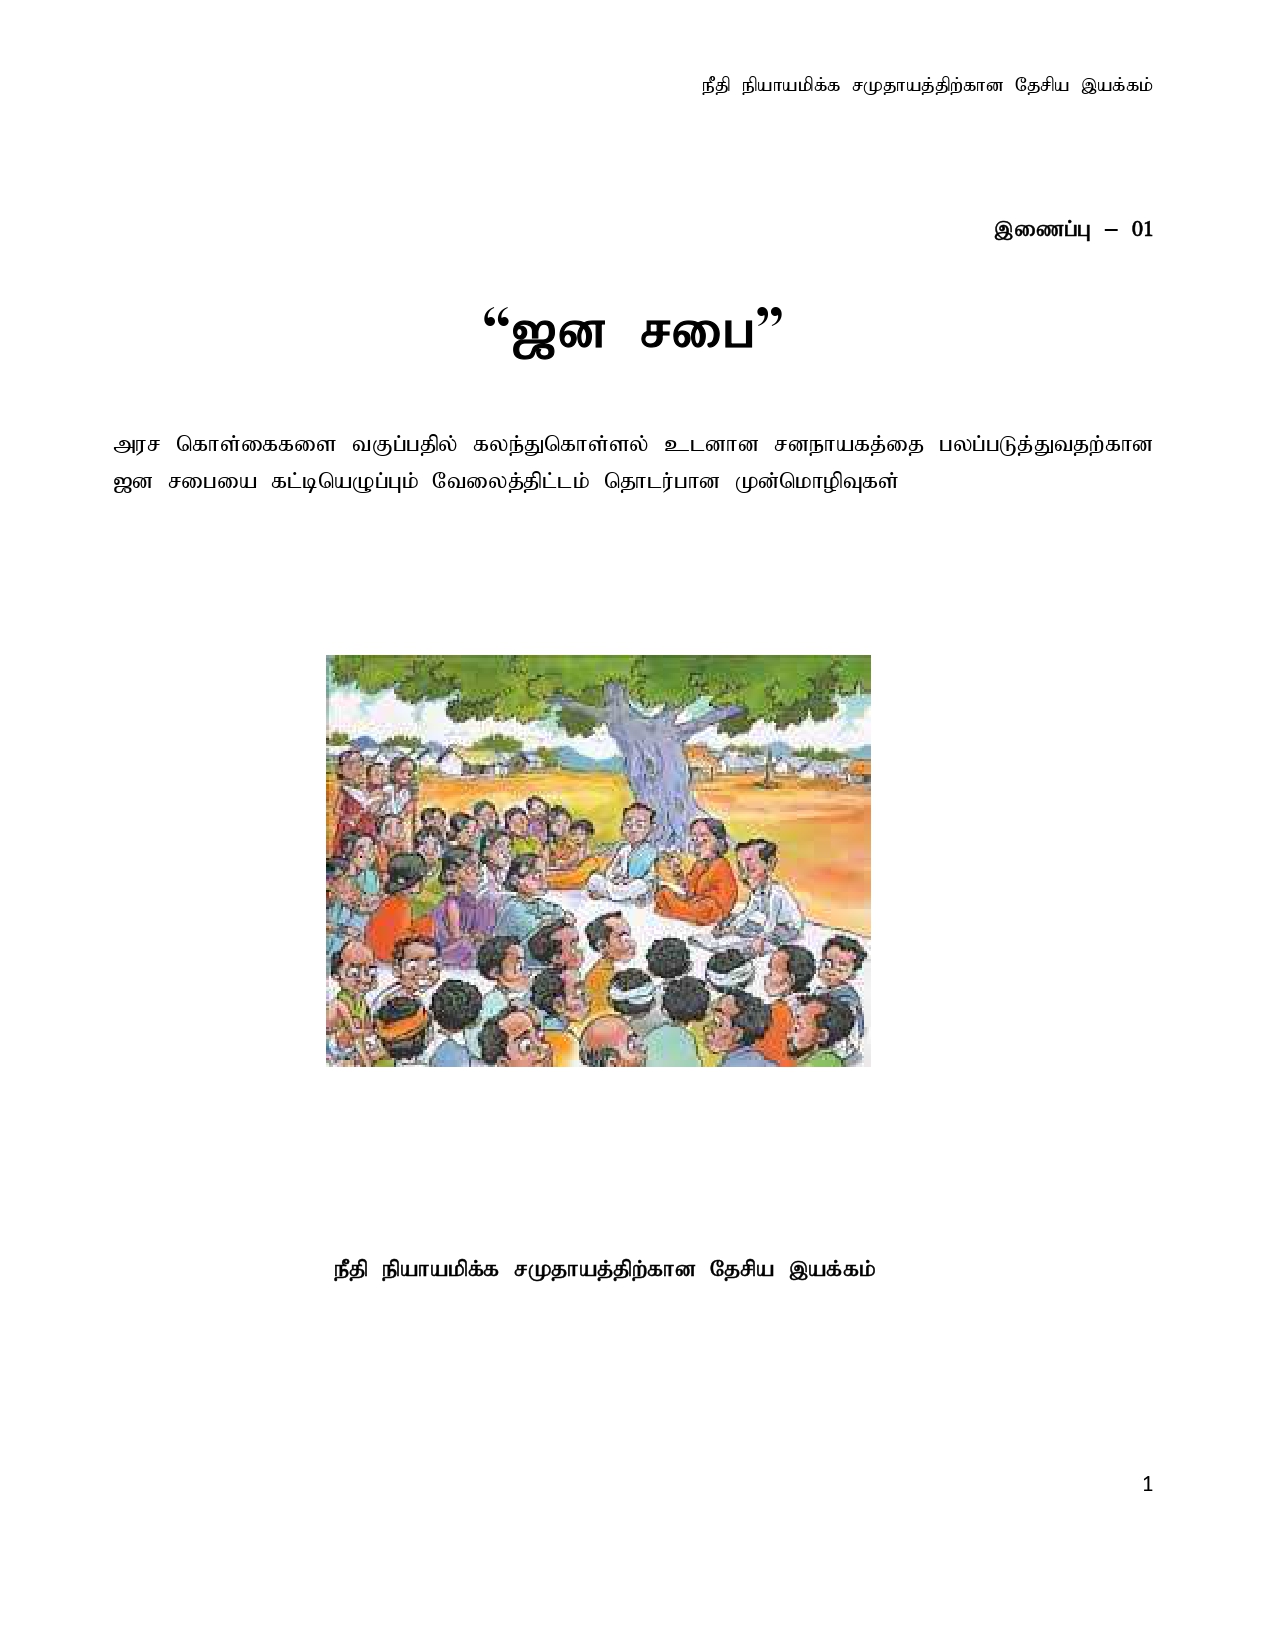 Janasabha Concept Tamil 1 page 0001